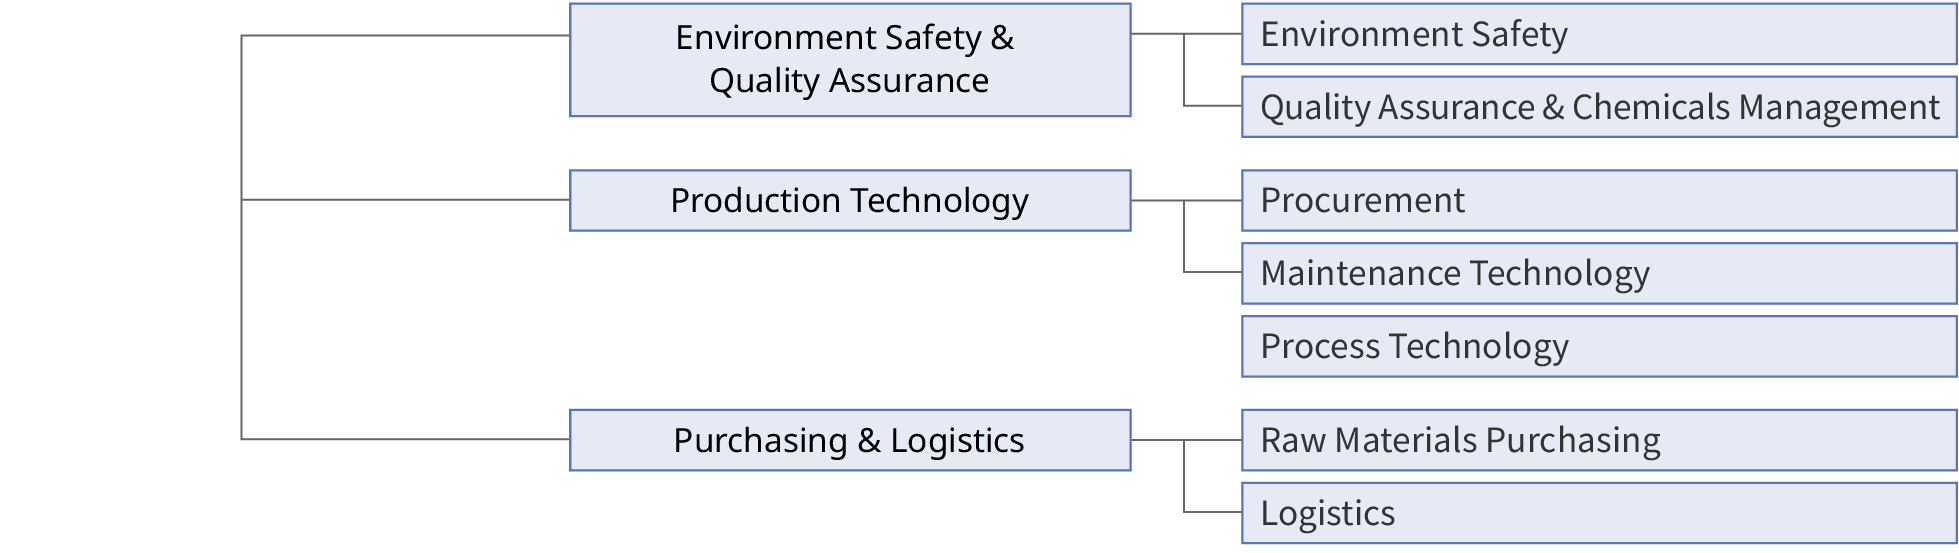 Figure: organization chart6. it shows environmental safety & quality assurance etc